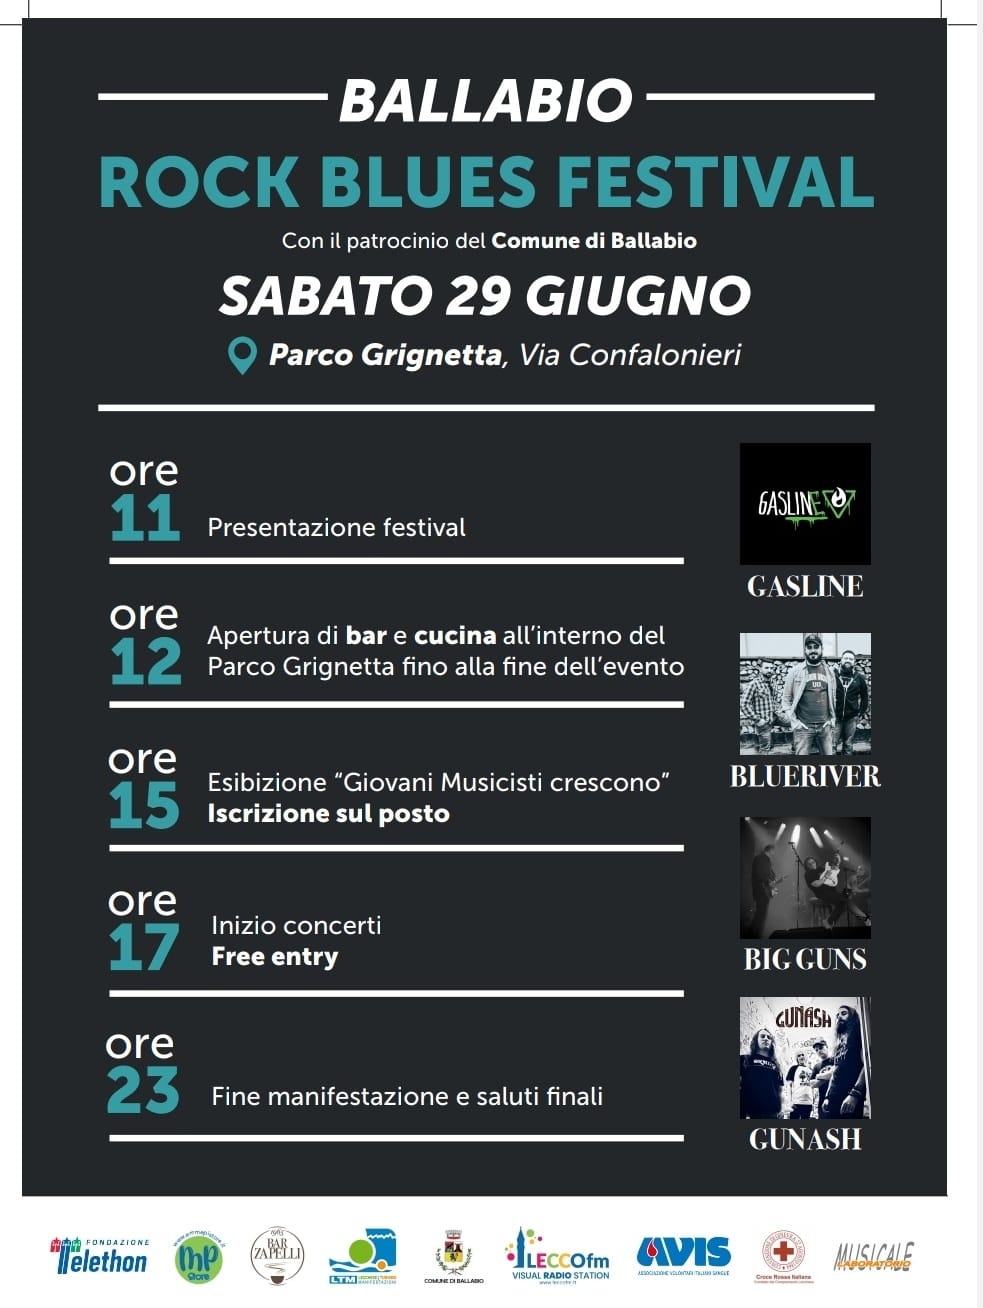 Rock Blues Festival Ballabio